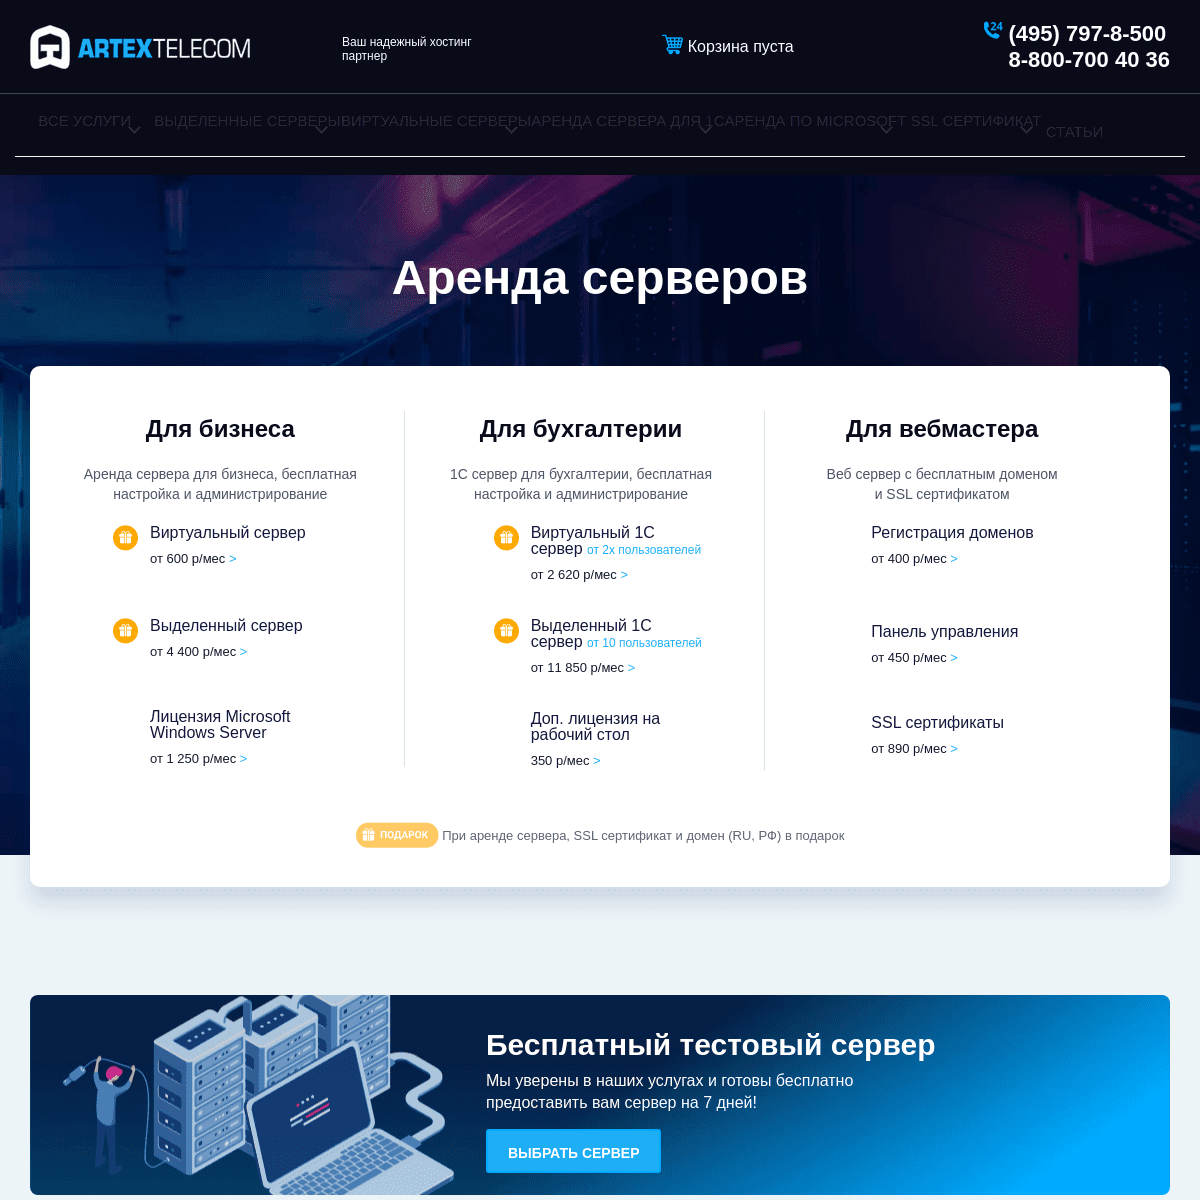 A complete backup of https://depohost.ru